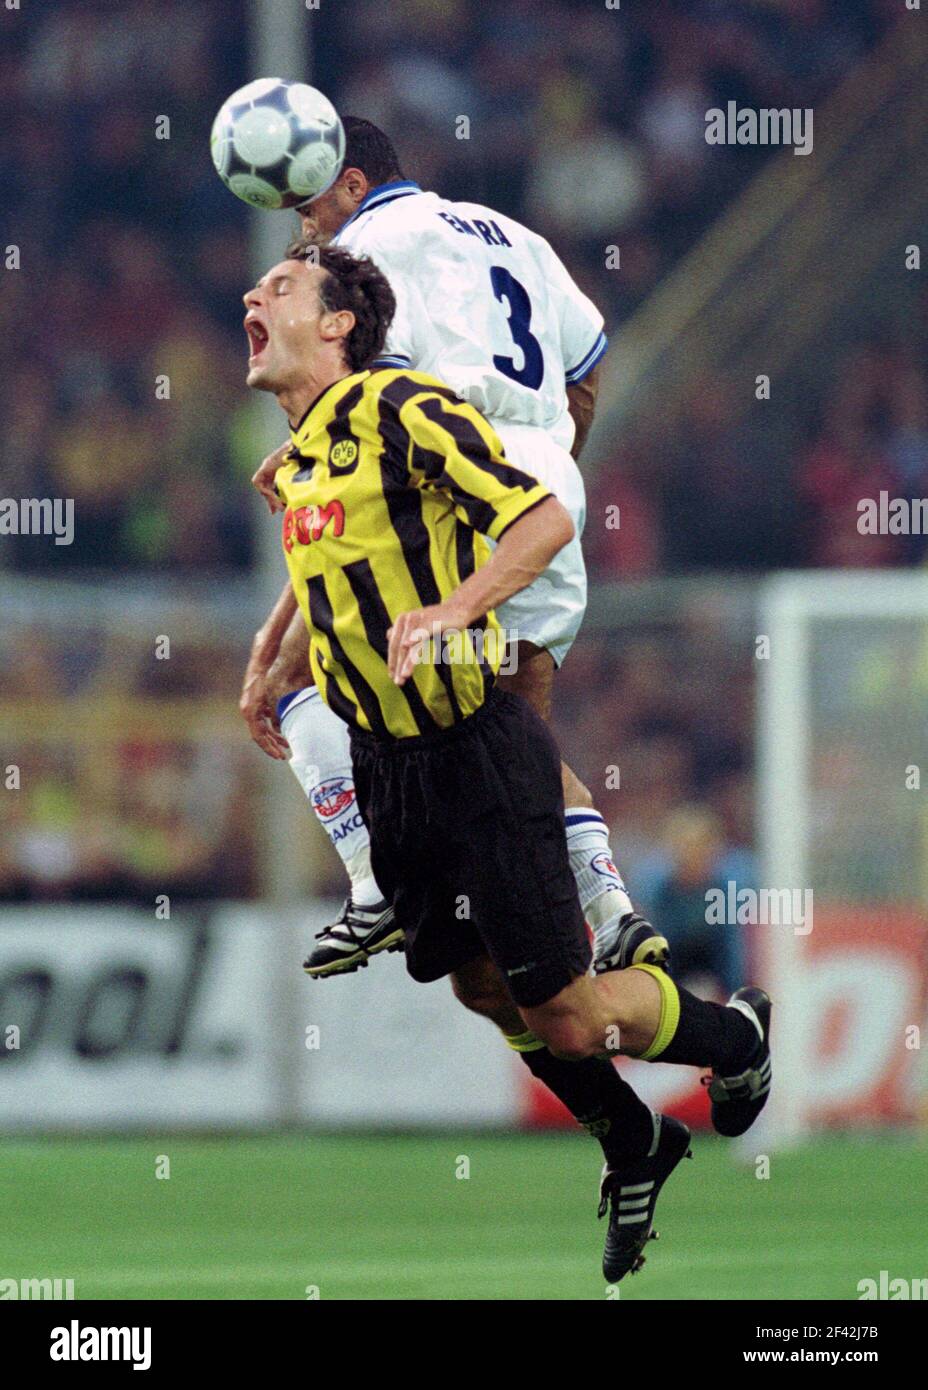 Dortmund, Germany 11.8. 2000, Football:  Bundesliga season 2000/01,  Borussia Dortmund (BVB, yellow) vs Hansa Rostock (HRO, white) 1:0 - Heiko HERRLICH (BVB),  Mohammed EMARA (HRO) Stock Photo